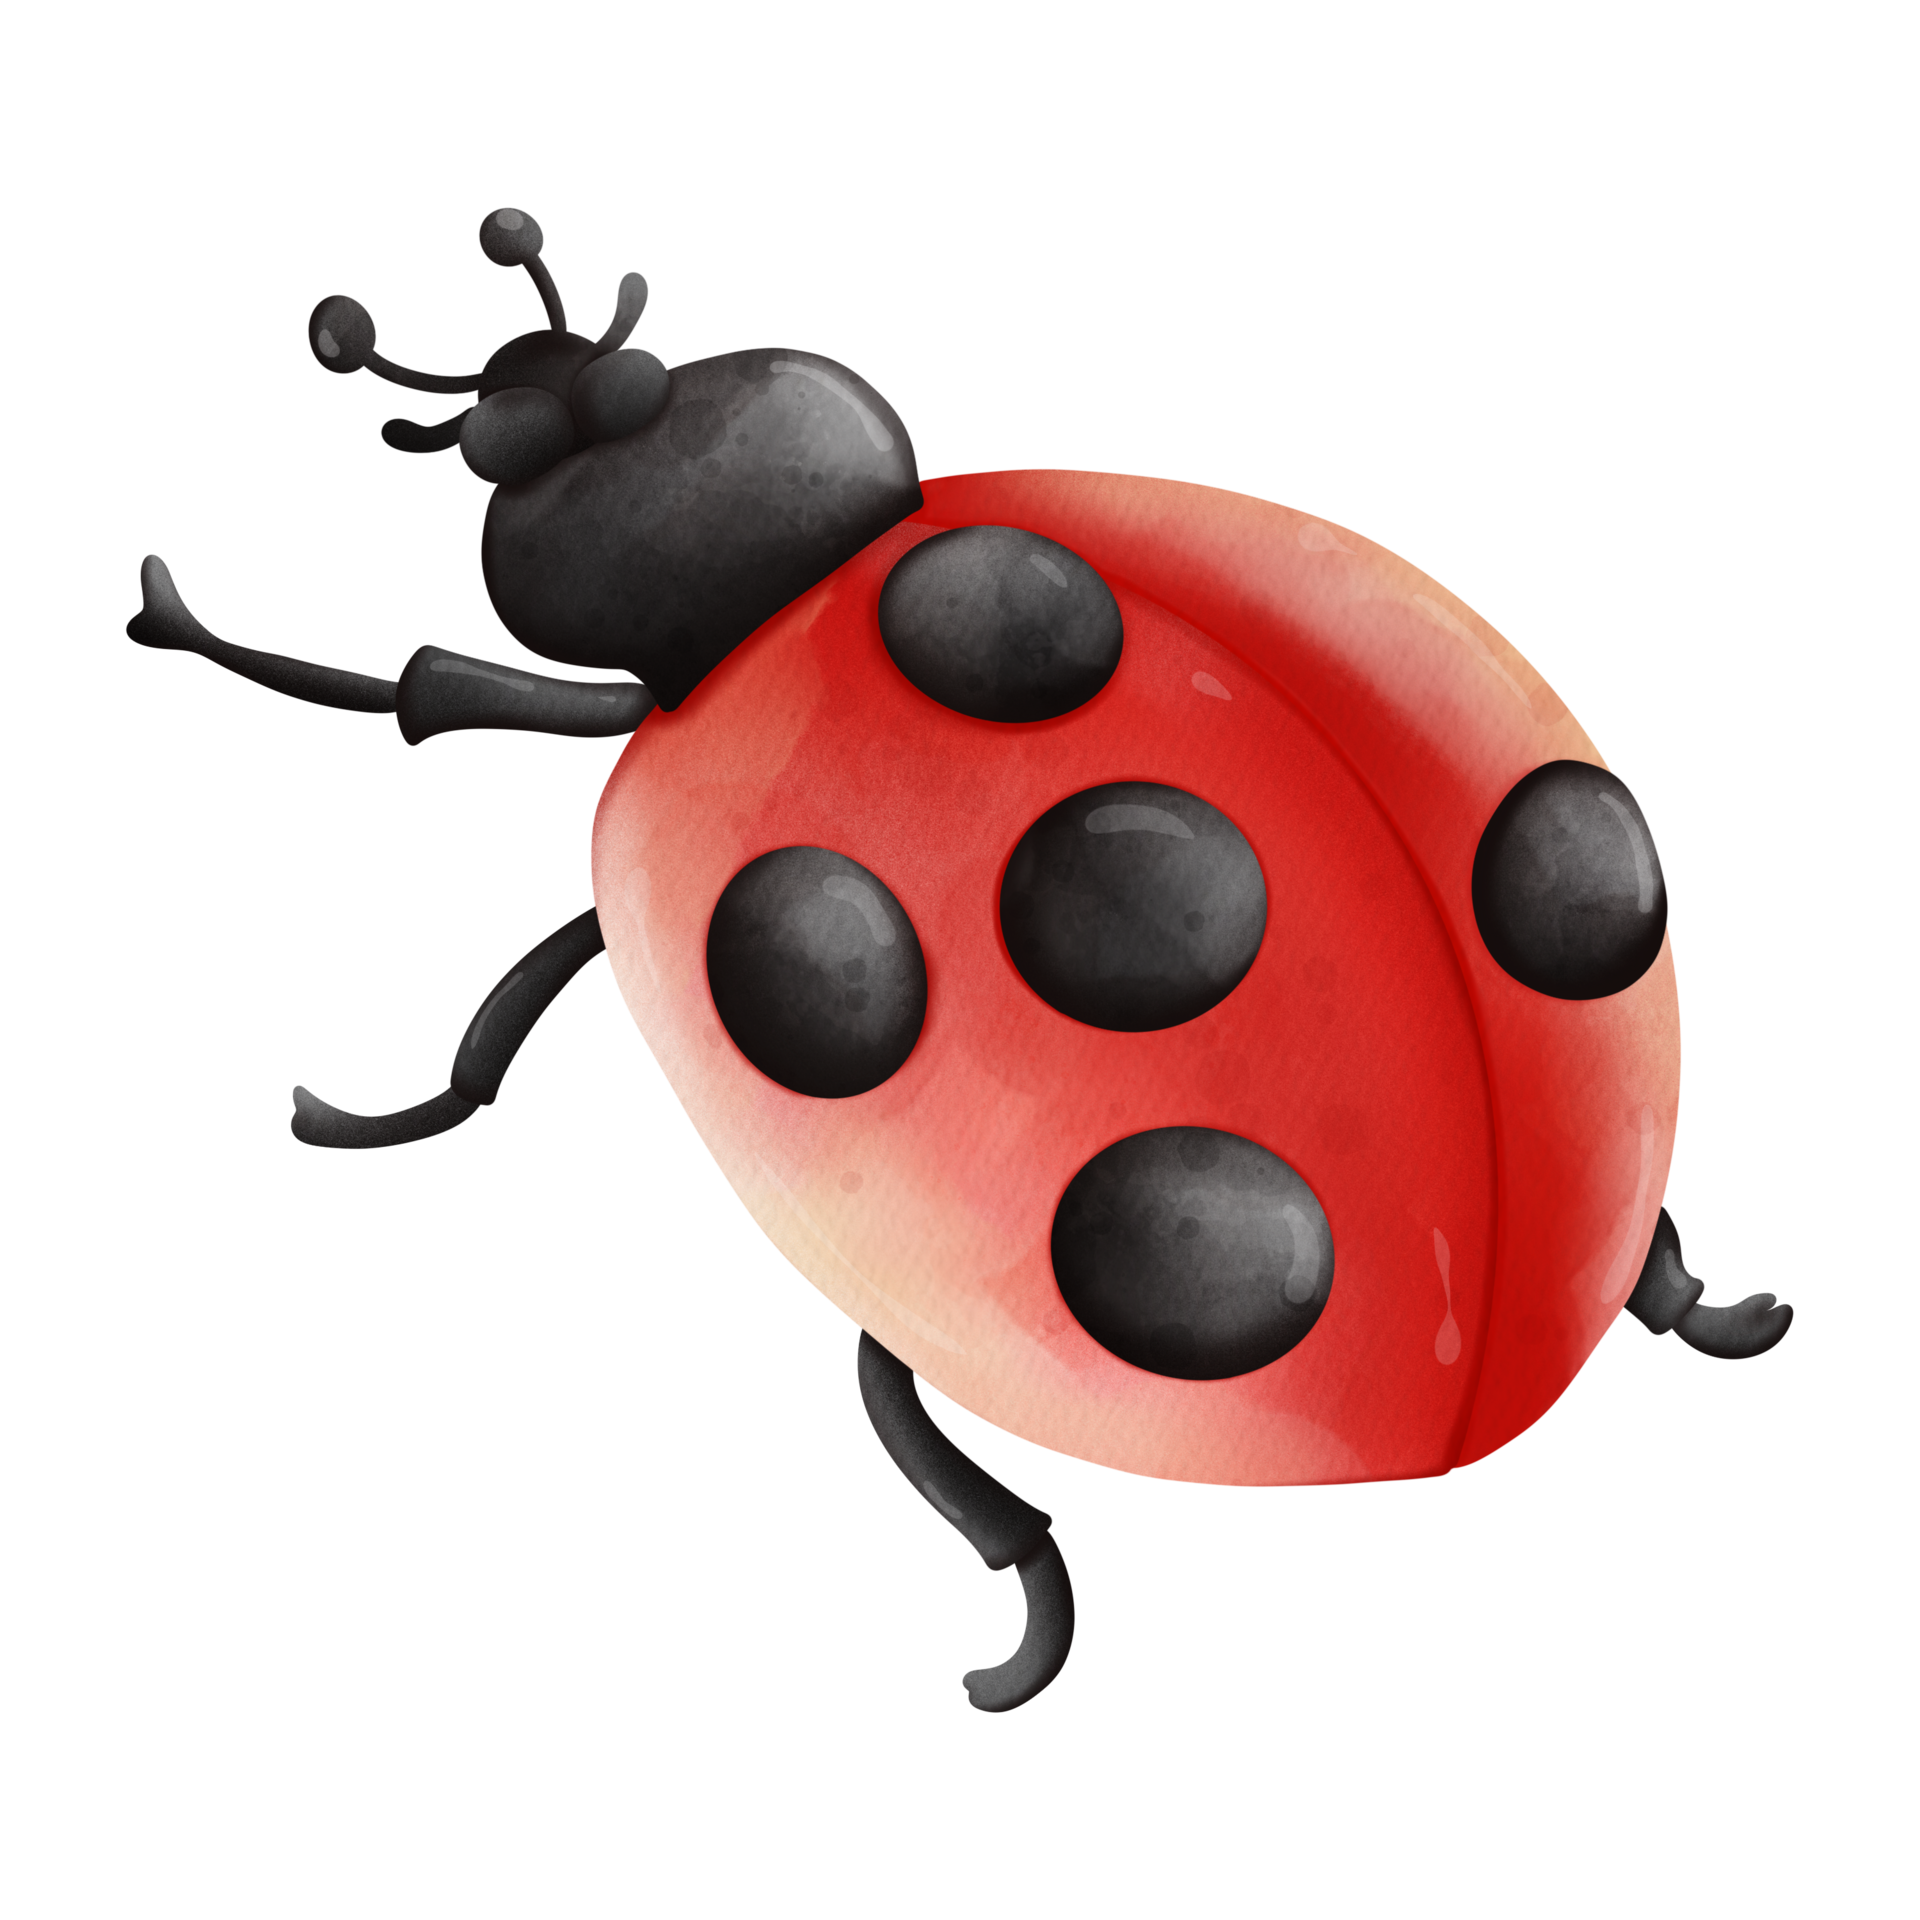 Ladybug PNG , Insect, Animal Imagem PNG e PSD Para Download Gratuito